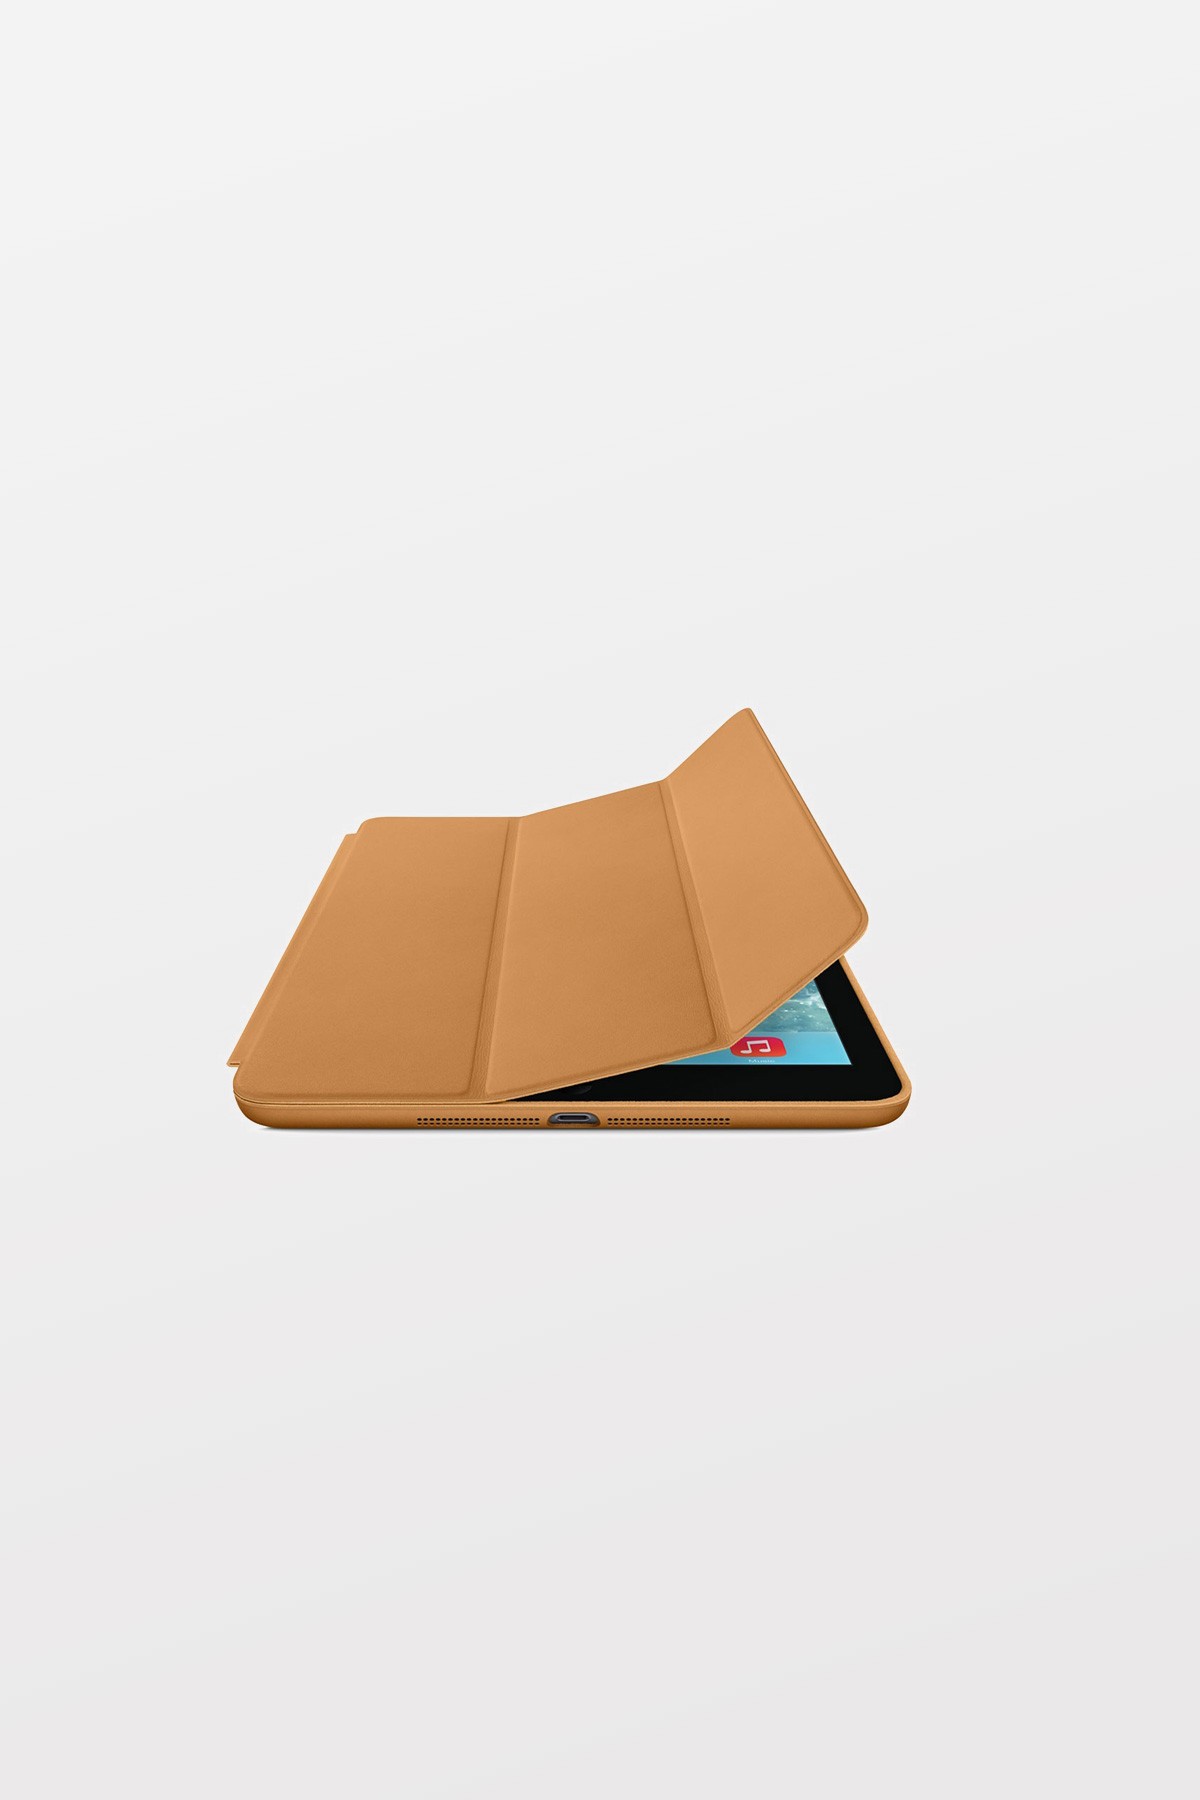 Apple iPad Air Smart Case - Brown